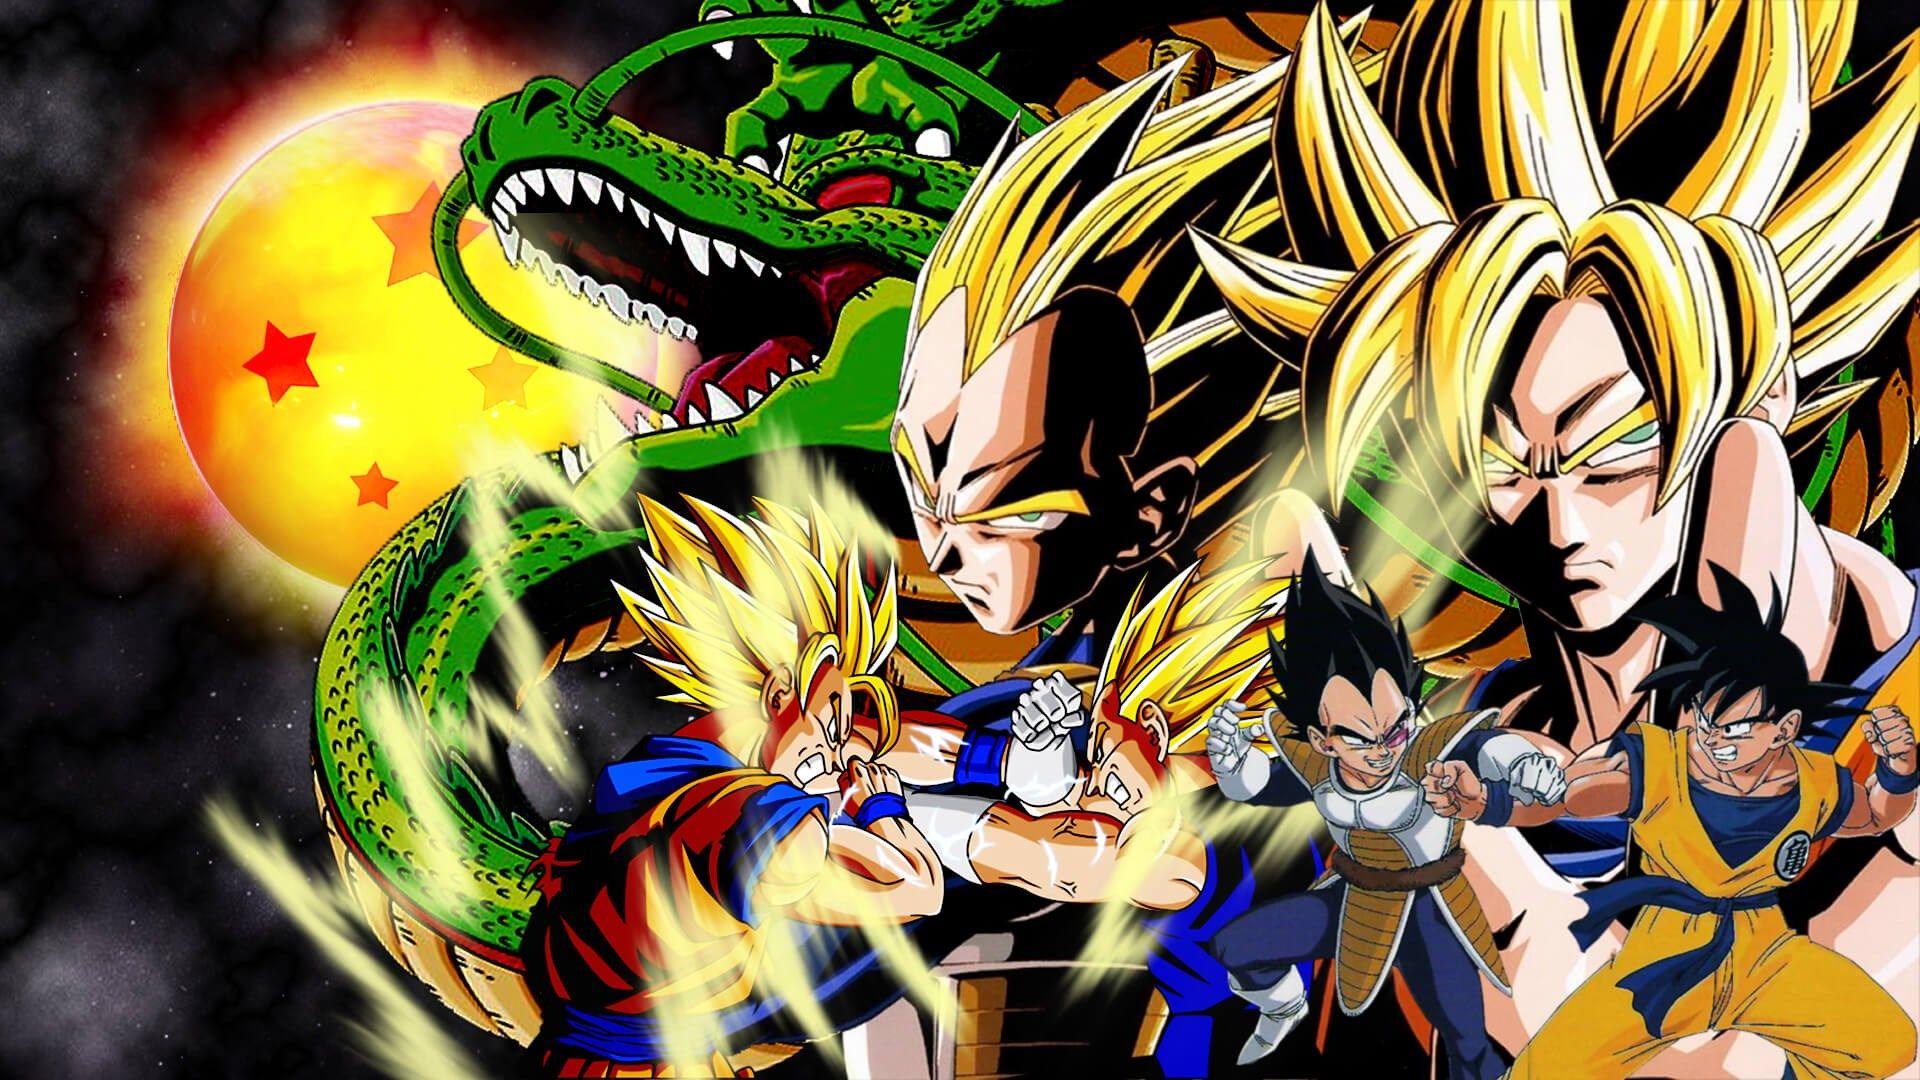 goku vs vegeta wallpaper. Goku wallpaper, Dbz wallpaper, Goku vs